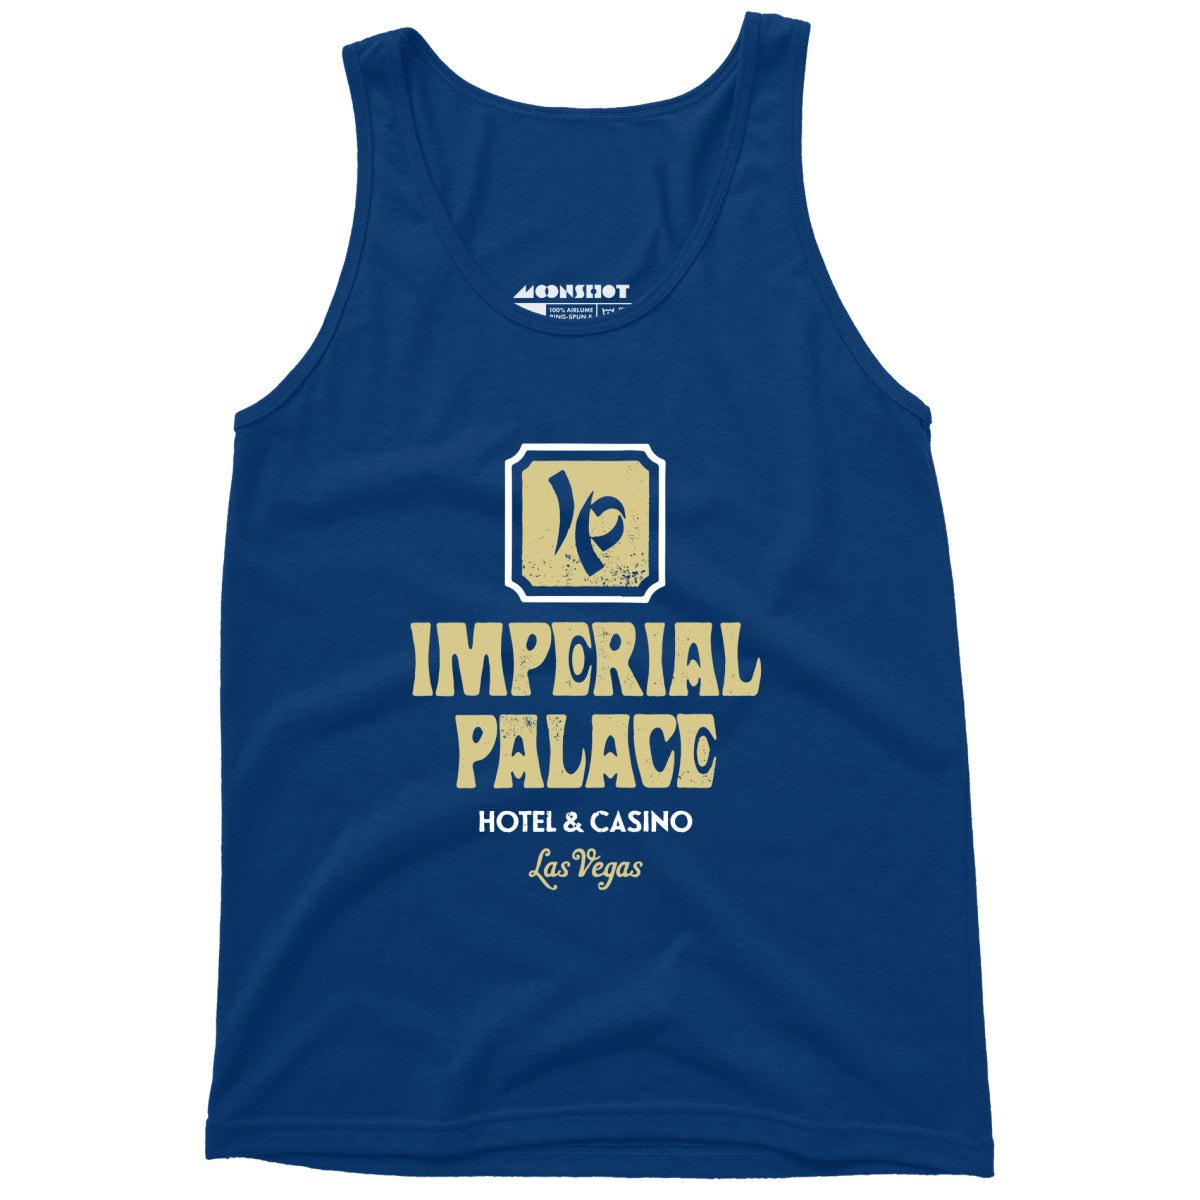 Imperial Palace Hotel & Casino - Vintage Las Vegas - Unisex Tank Top